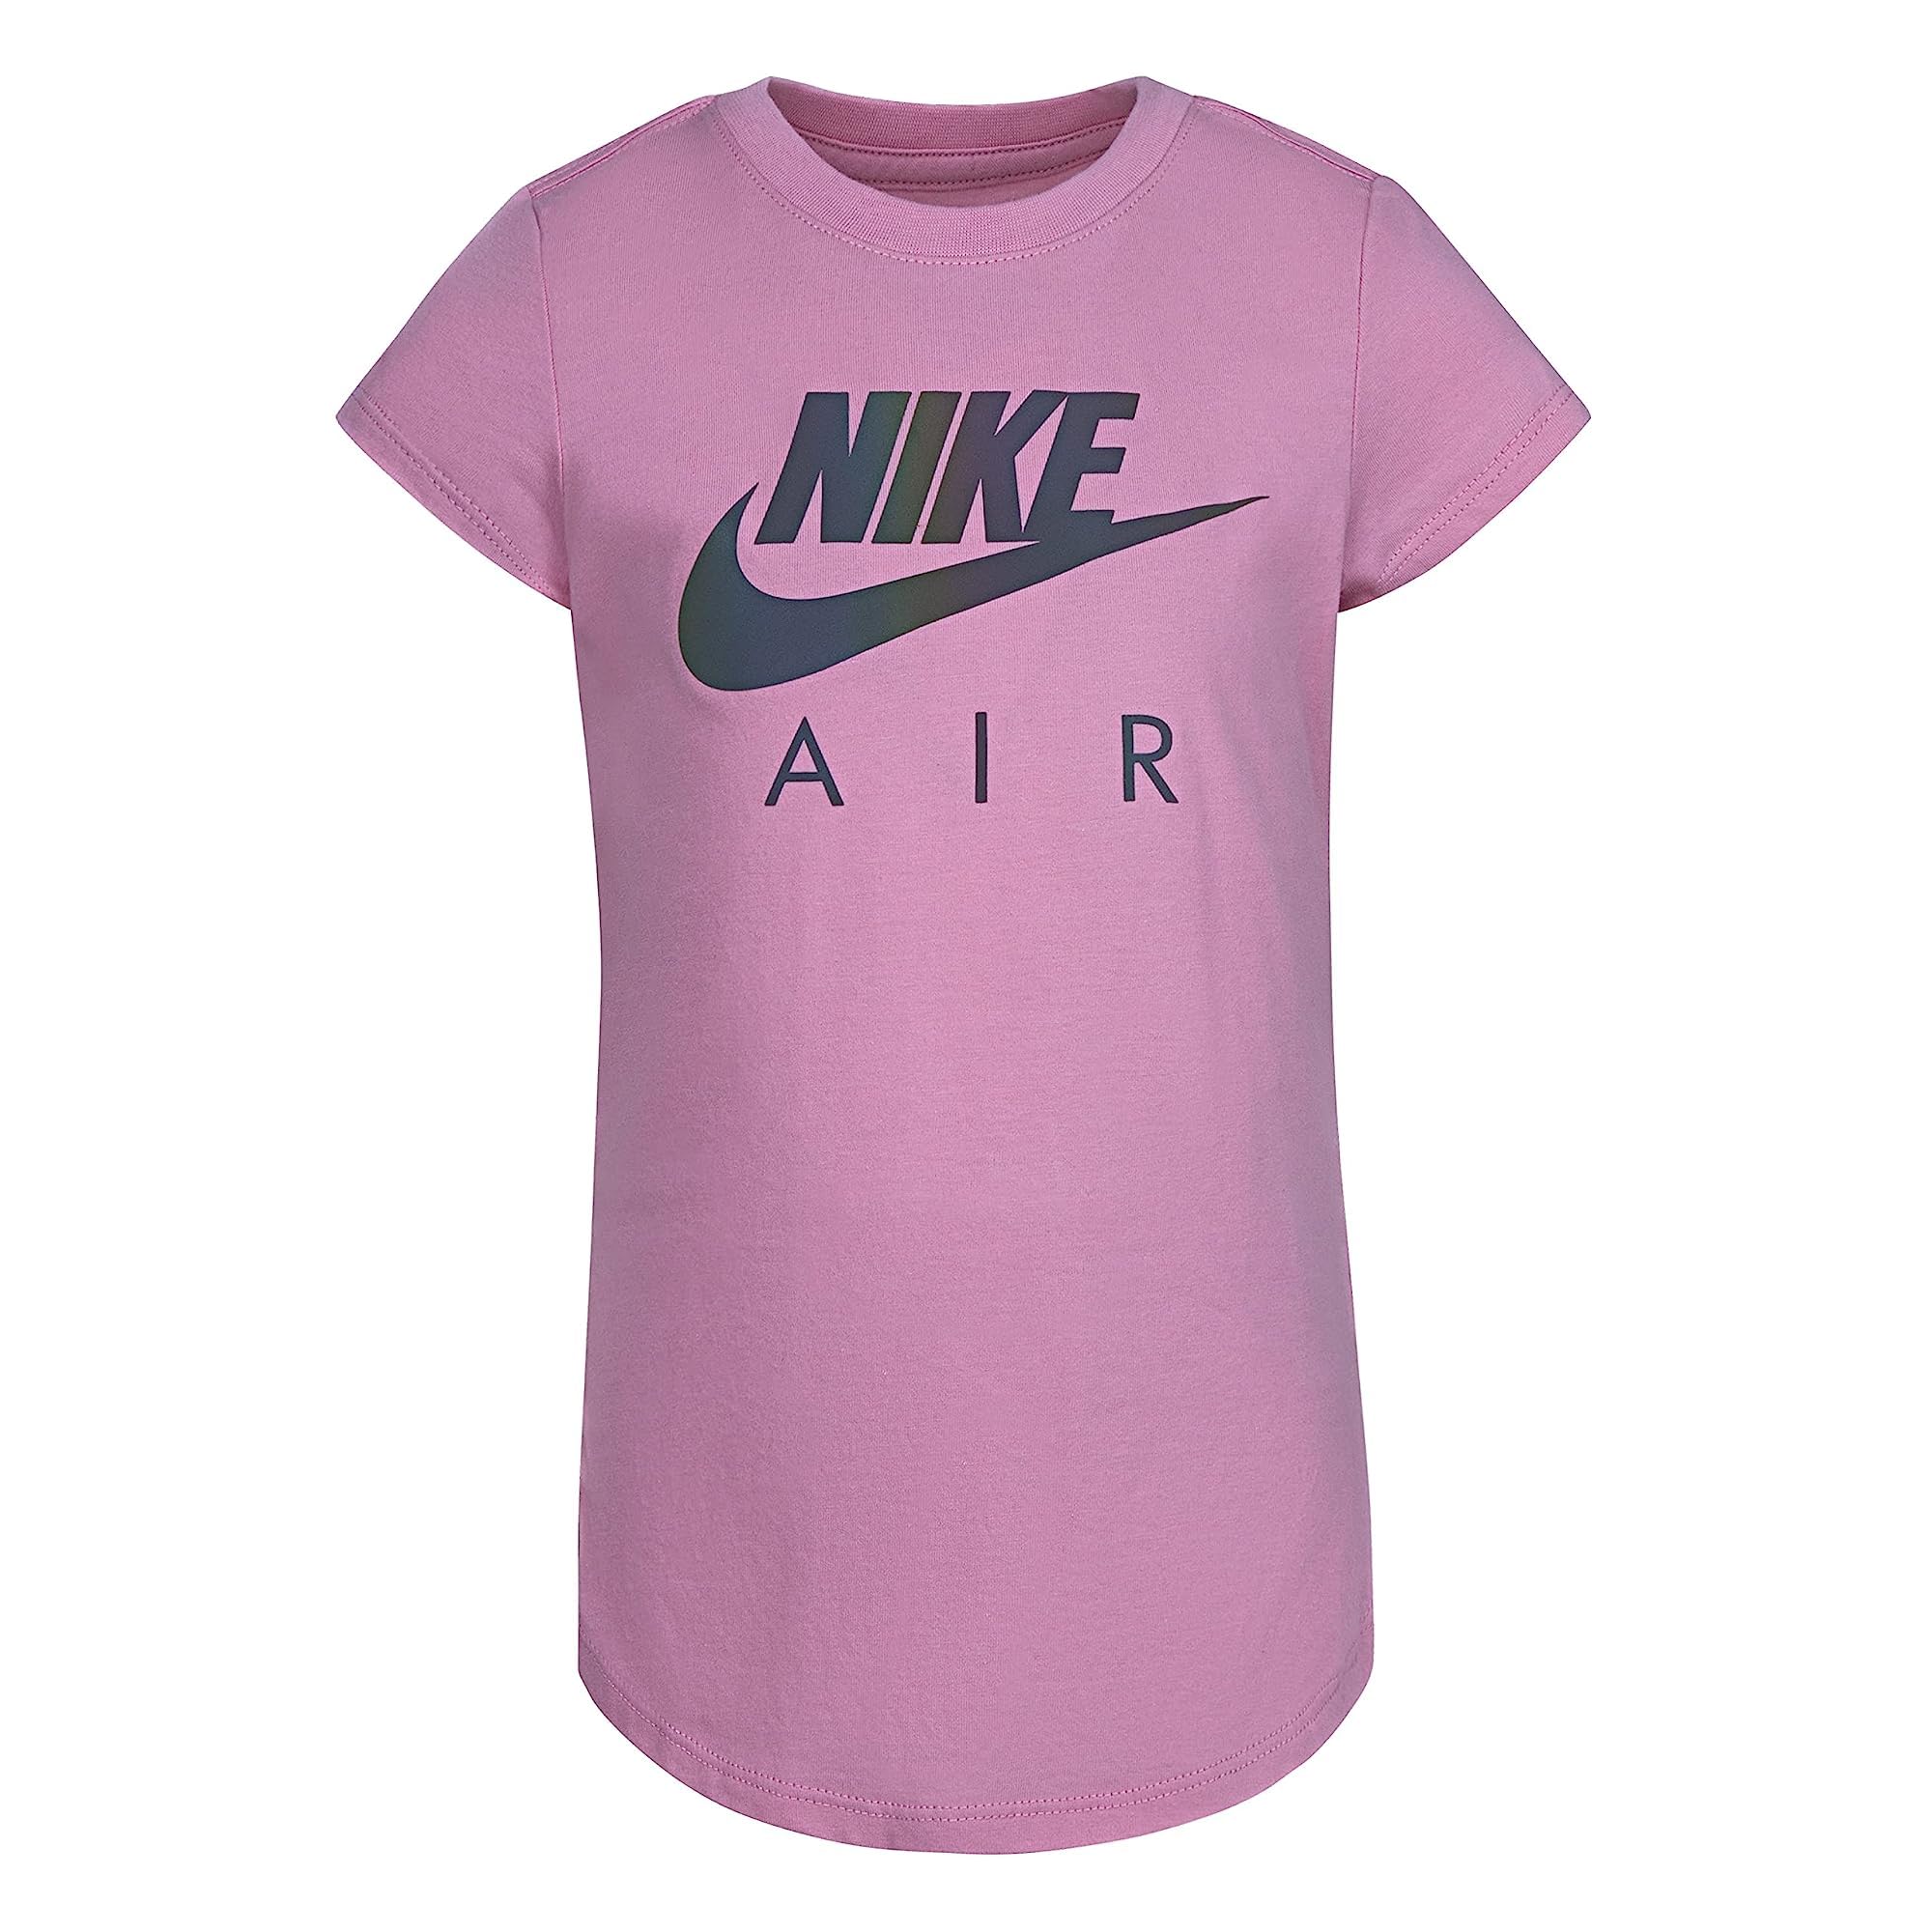 Nike Girl's Air Rainbow Reflective Tee (Little Kids)